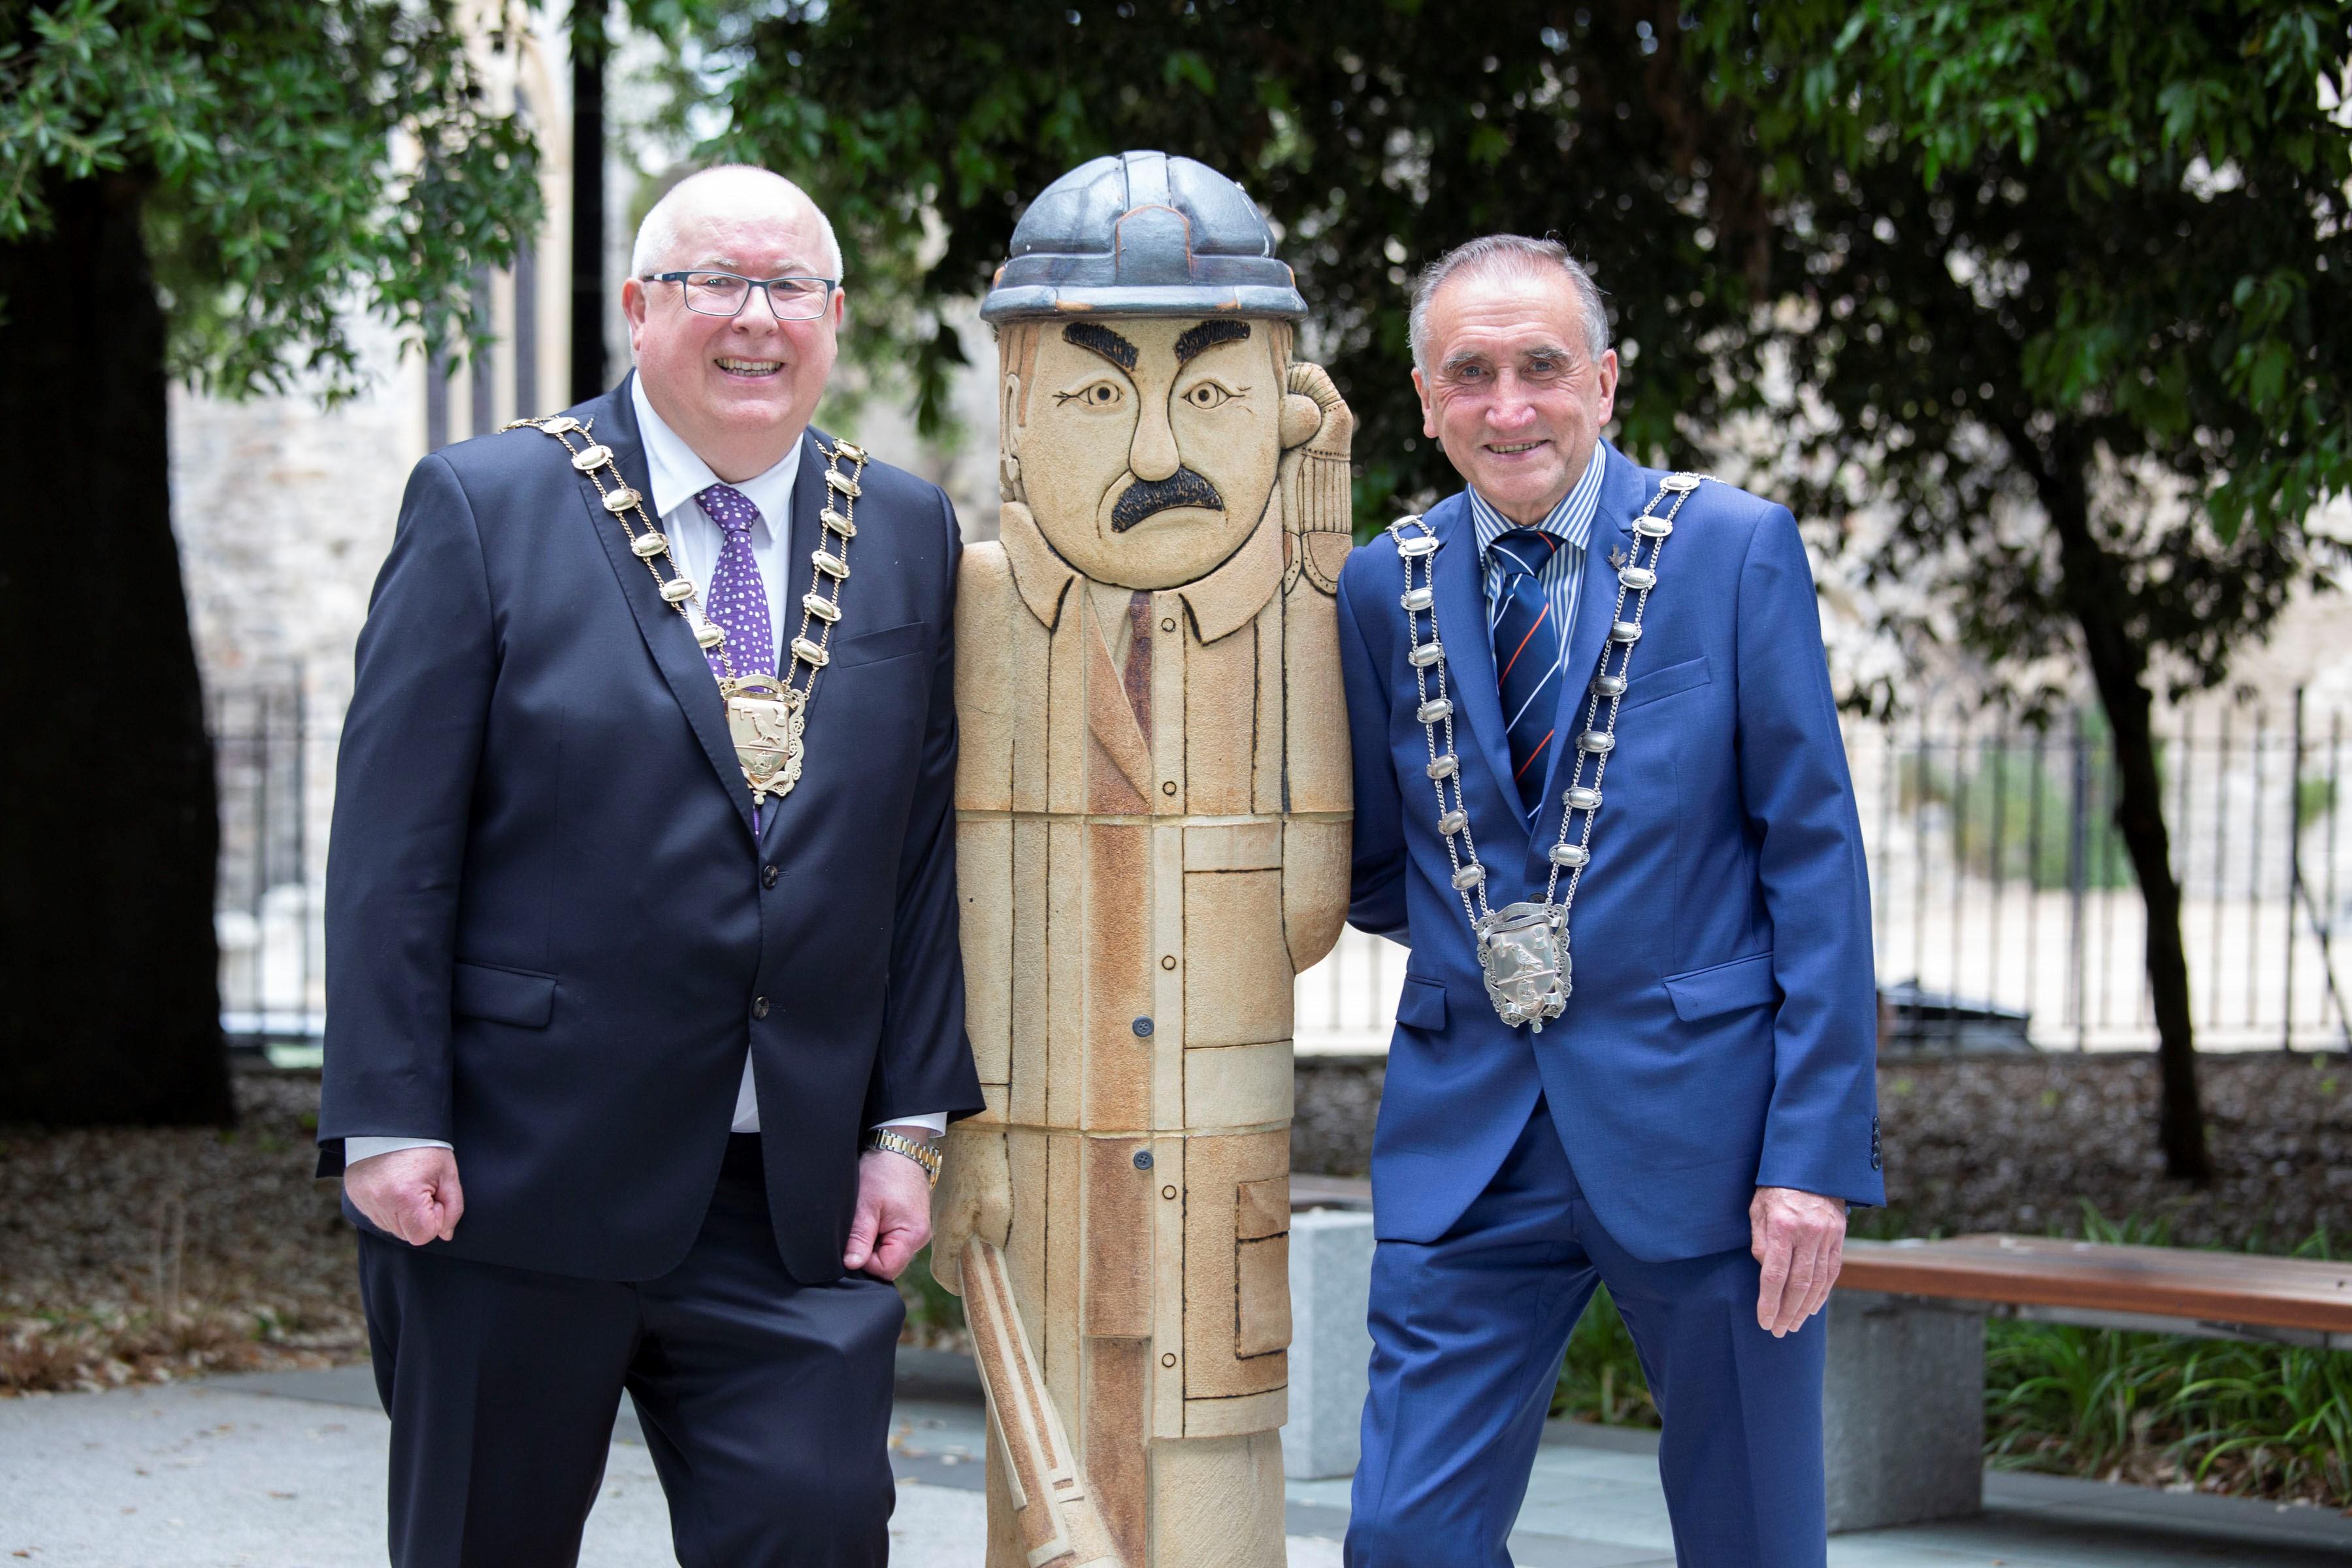 Cllr Howard Mahony has become the17th Mayor of Fingal